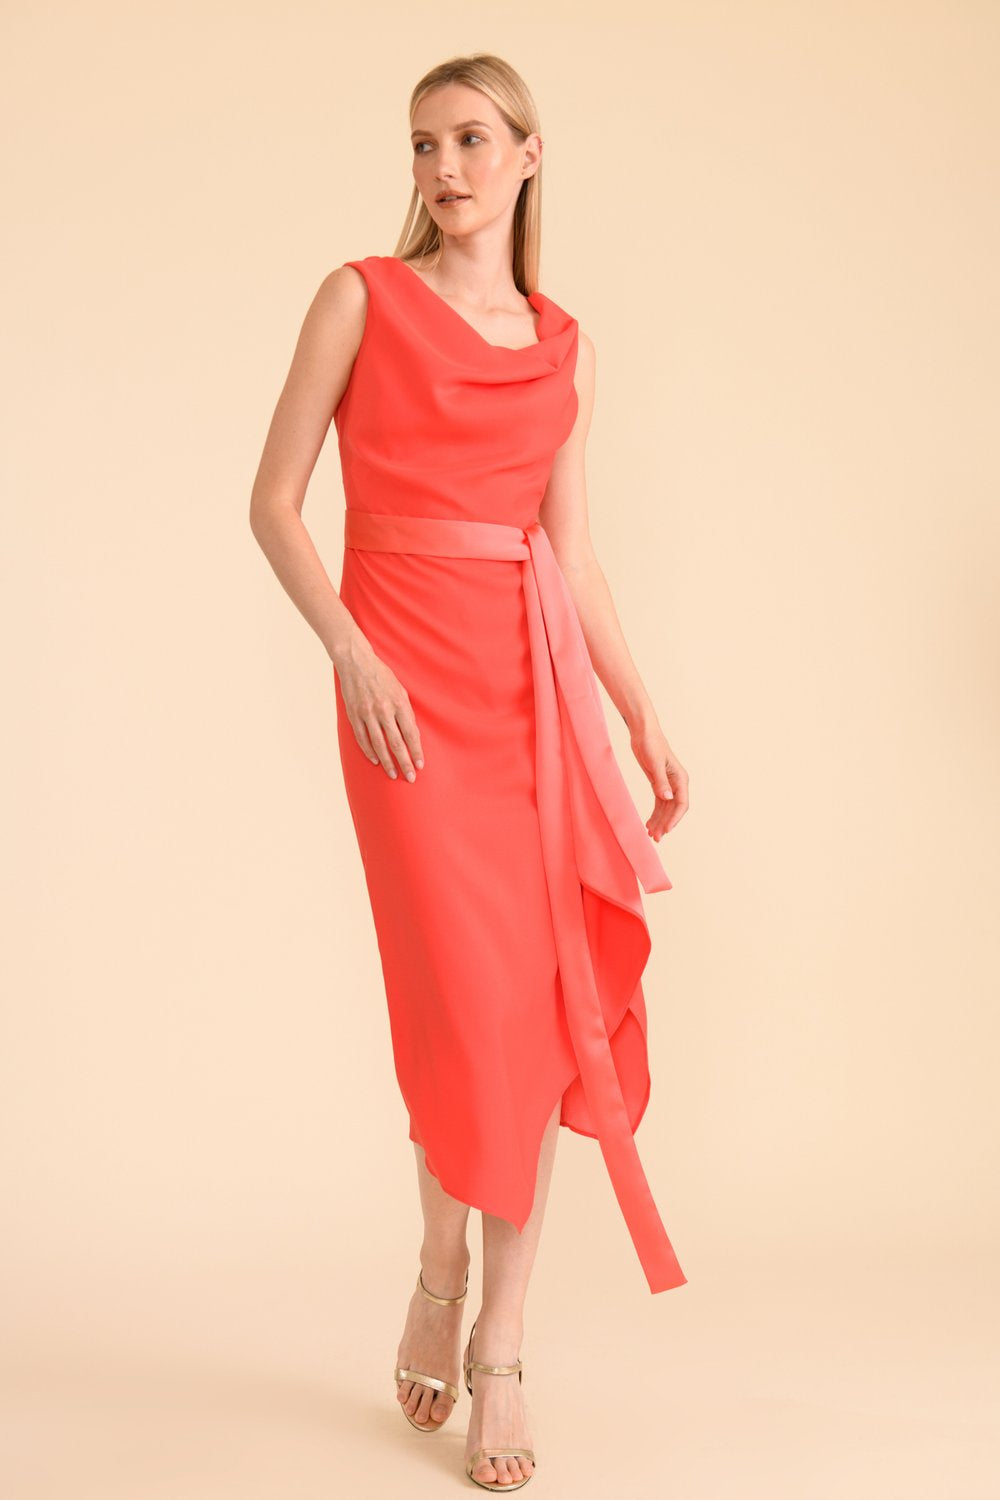 Olivia Orange Caroline Kilkenny Dress